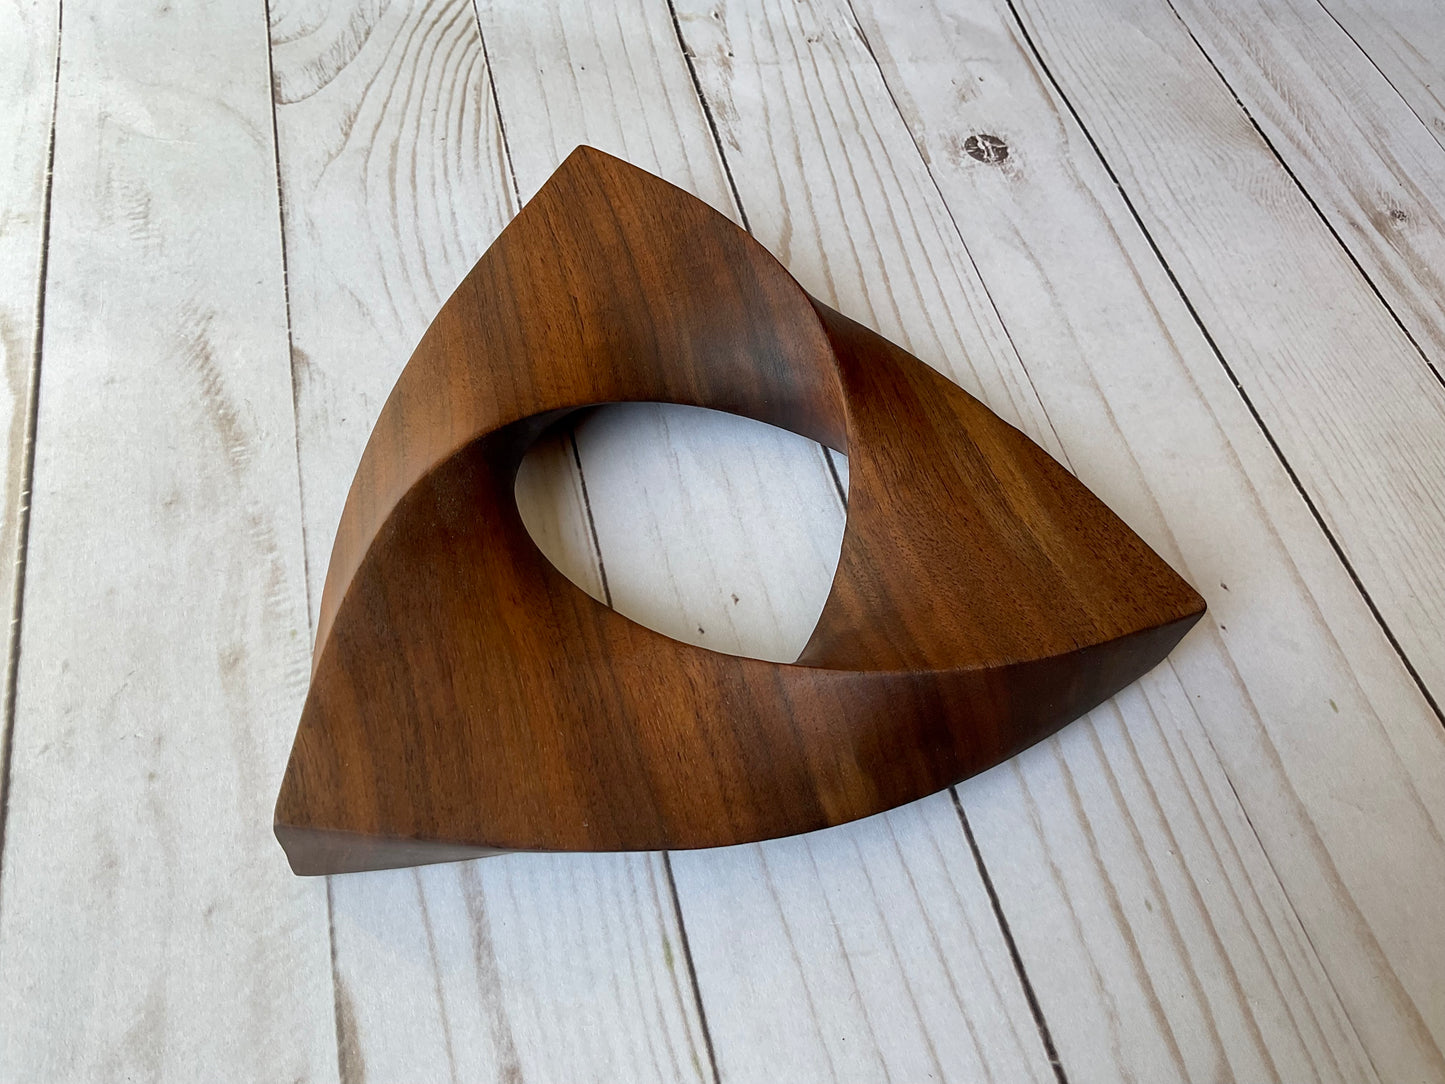 Penrose Triangle Inspired Walnut Wood Carving, 7.5 " diameter